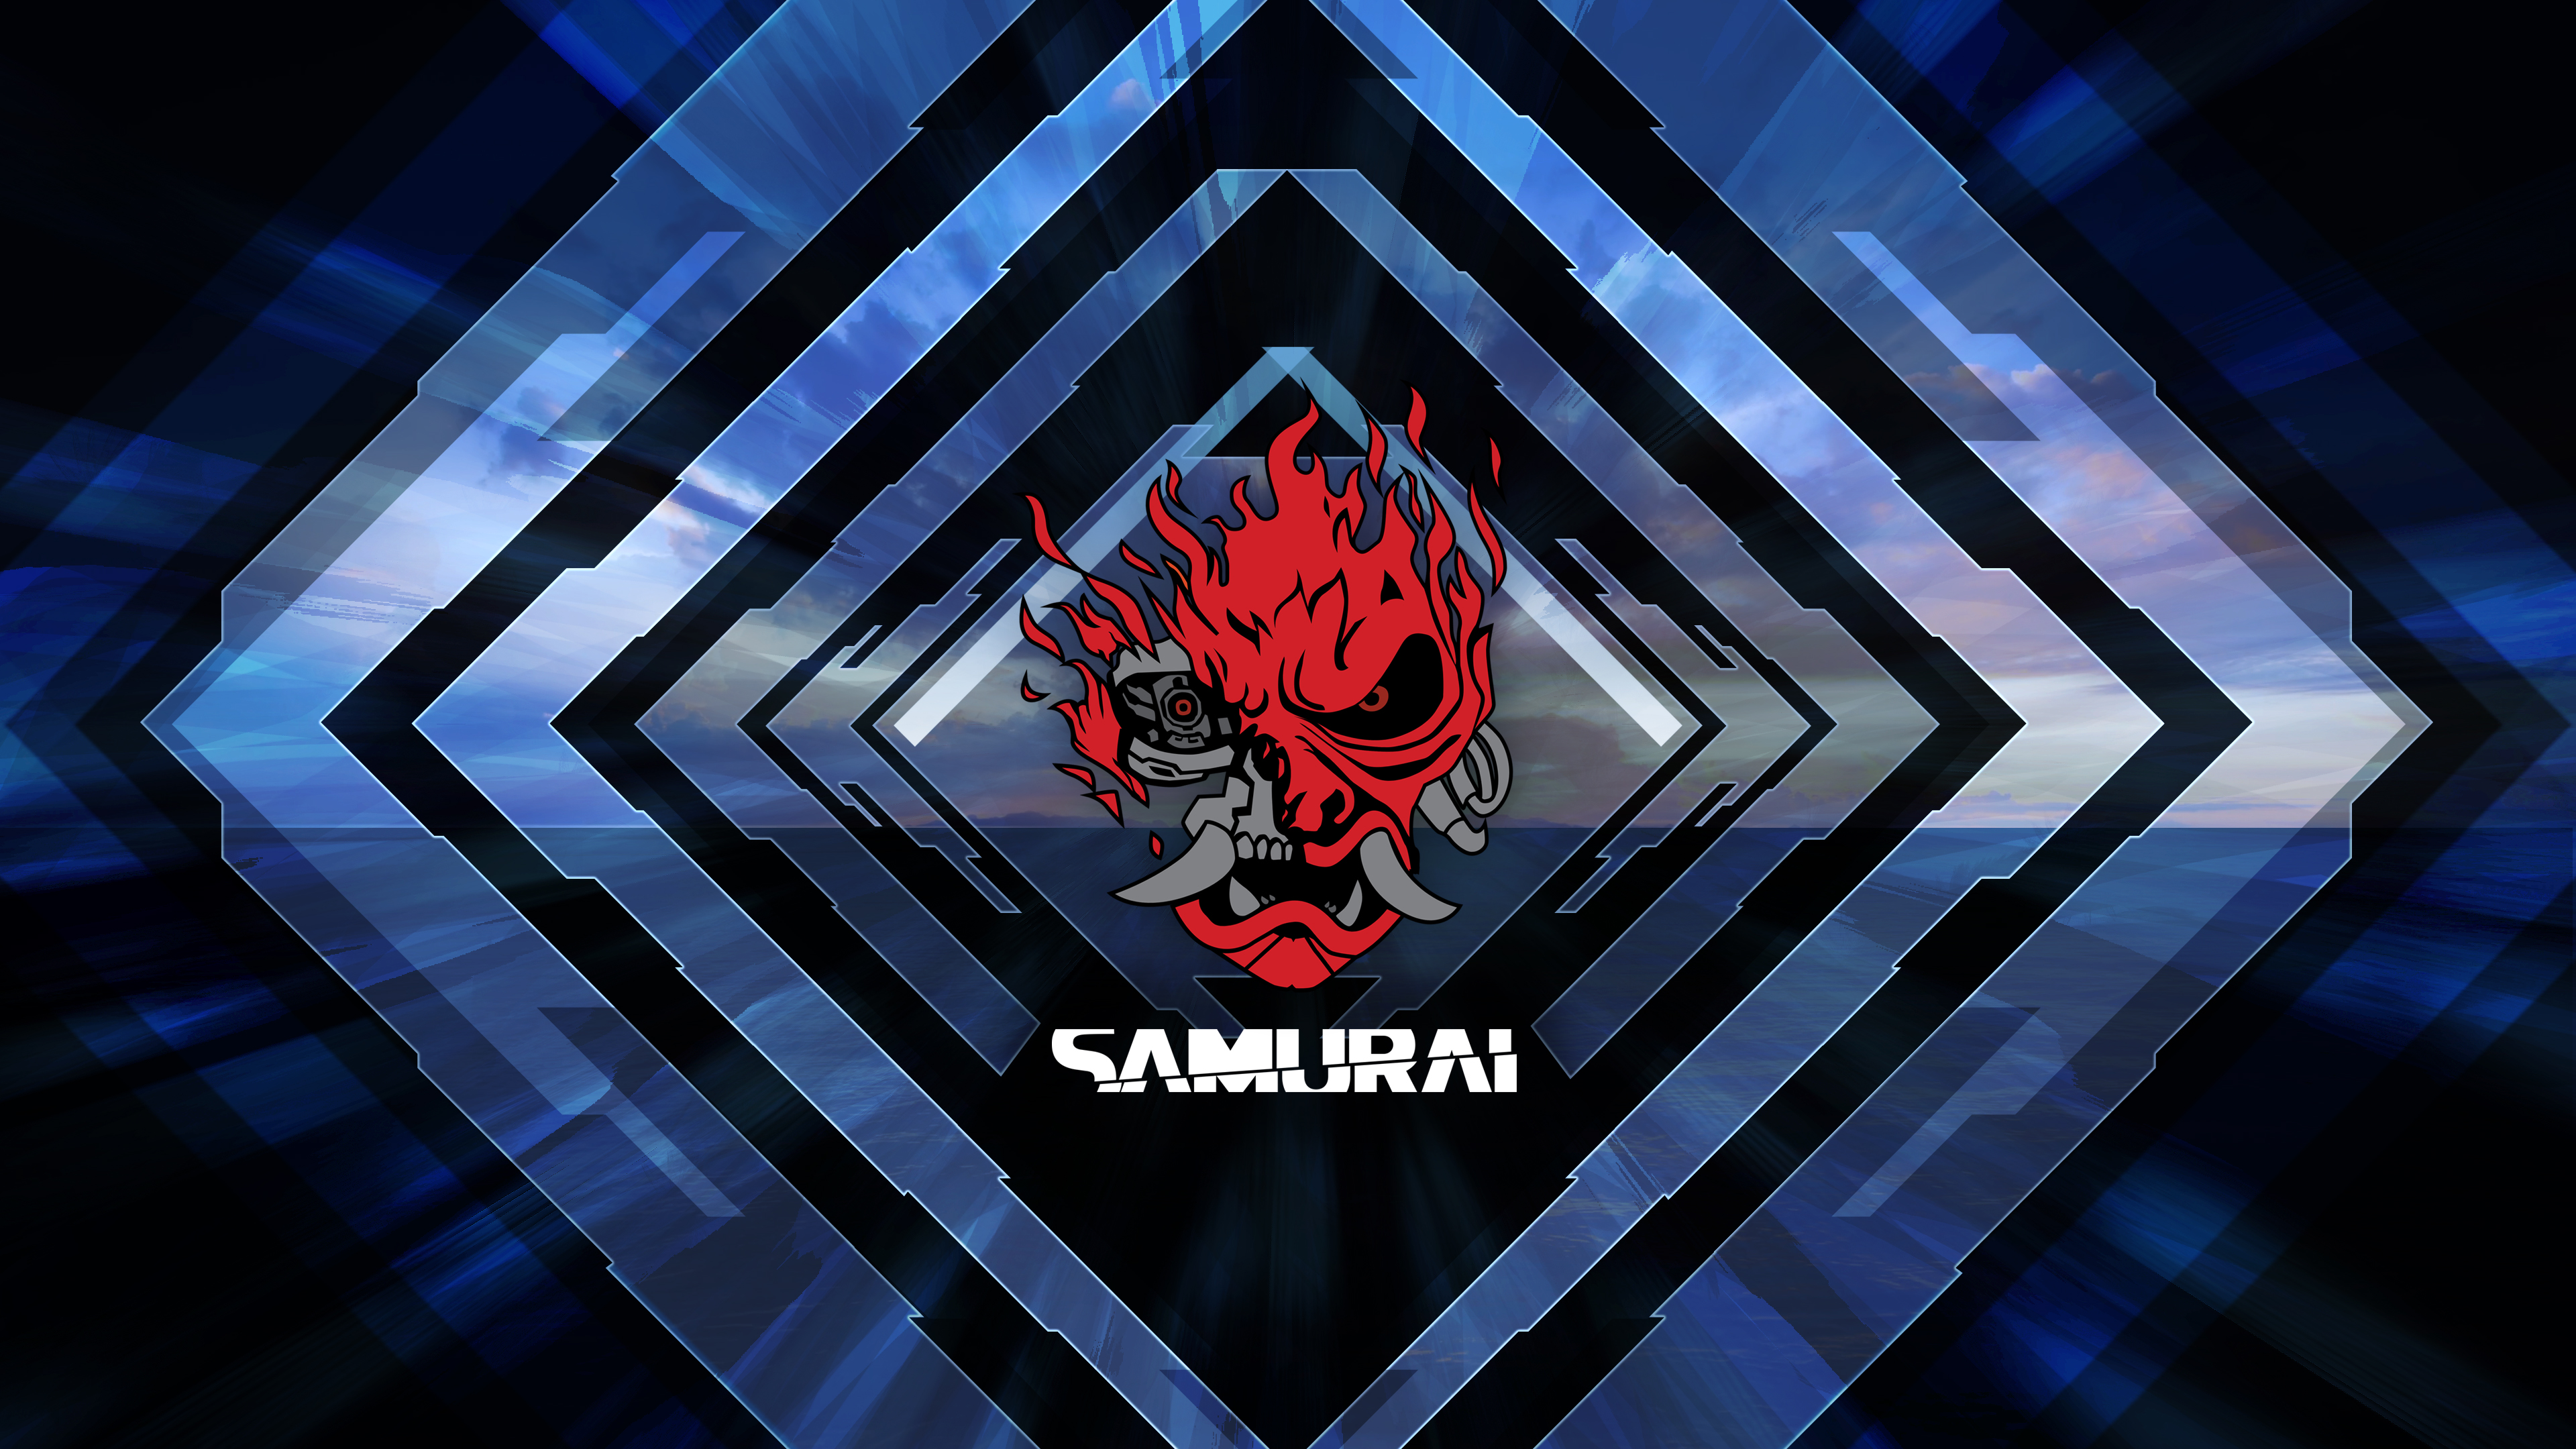 Cyberpunk Samurai Logo 4k, HD Games, 4k Wallpaper, Image, Background, Photo and Picture